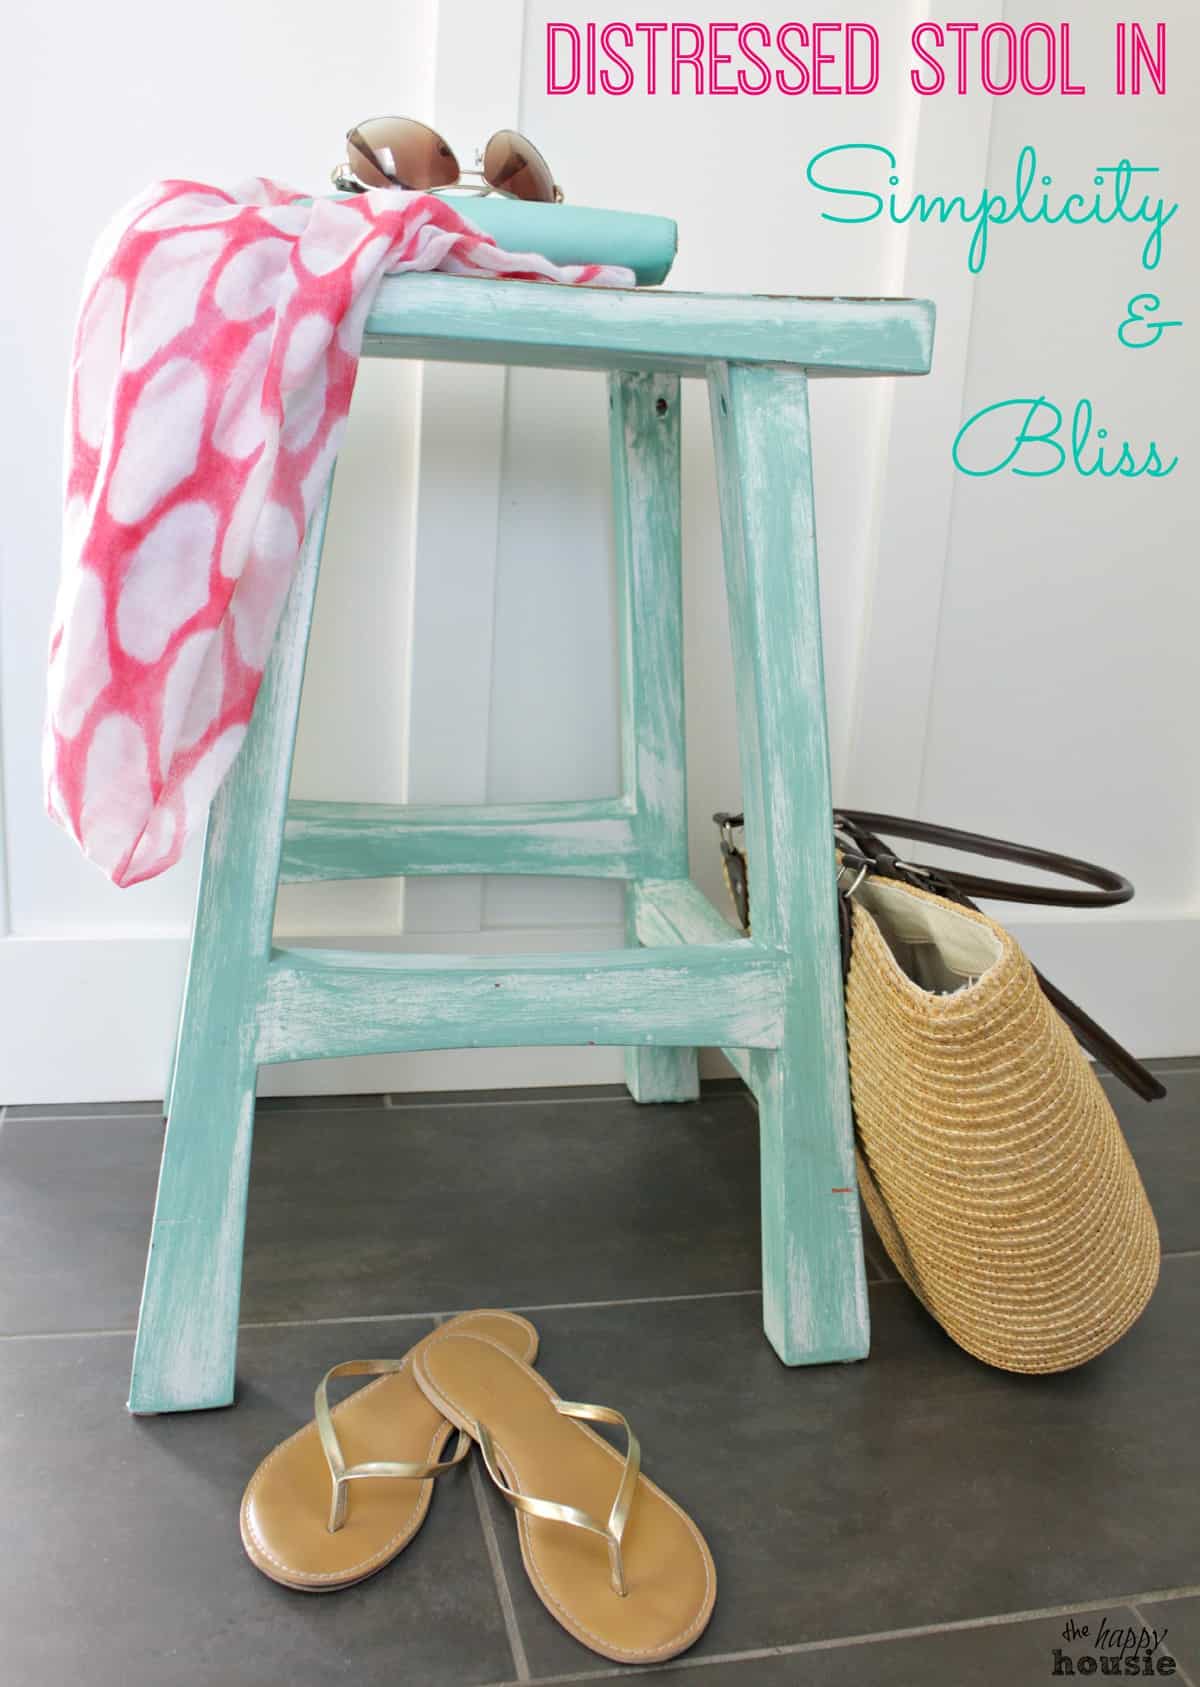 Beautiful turquoise distressed stool #DIY #paintedfurniture #drybrushing - www.countrychicpaint.com/blog